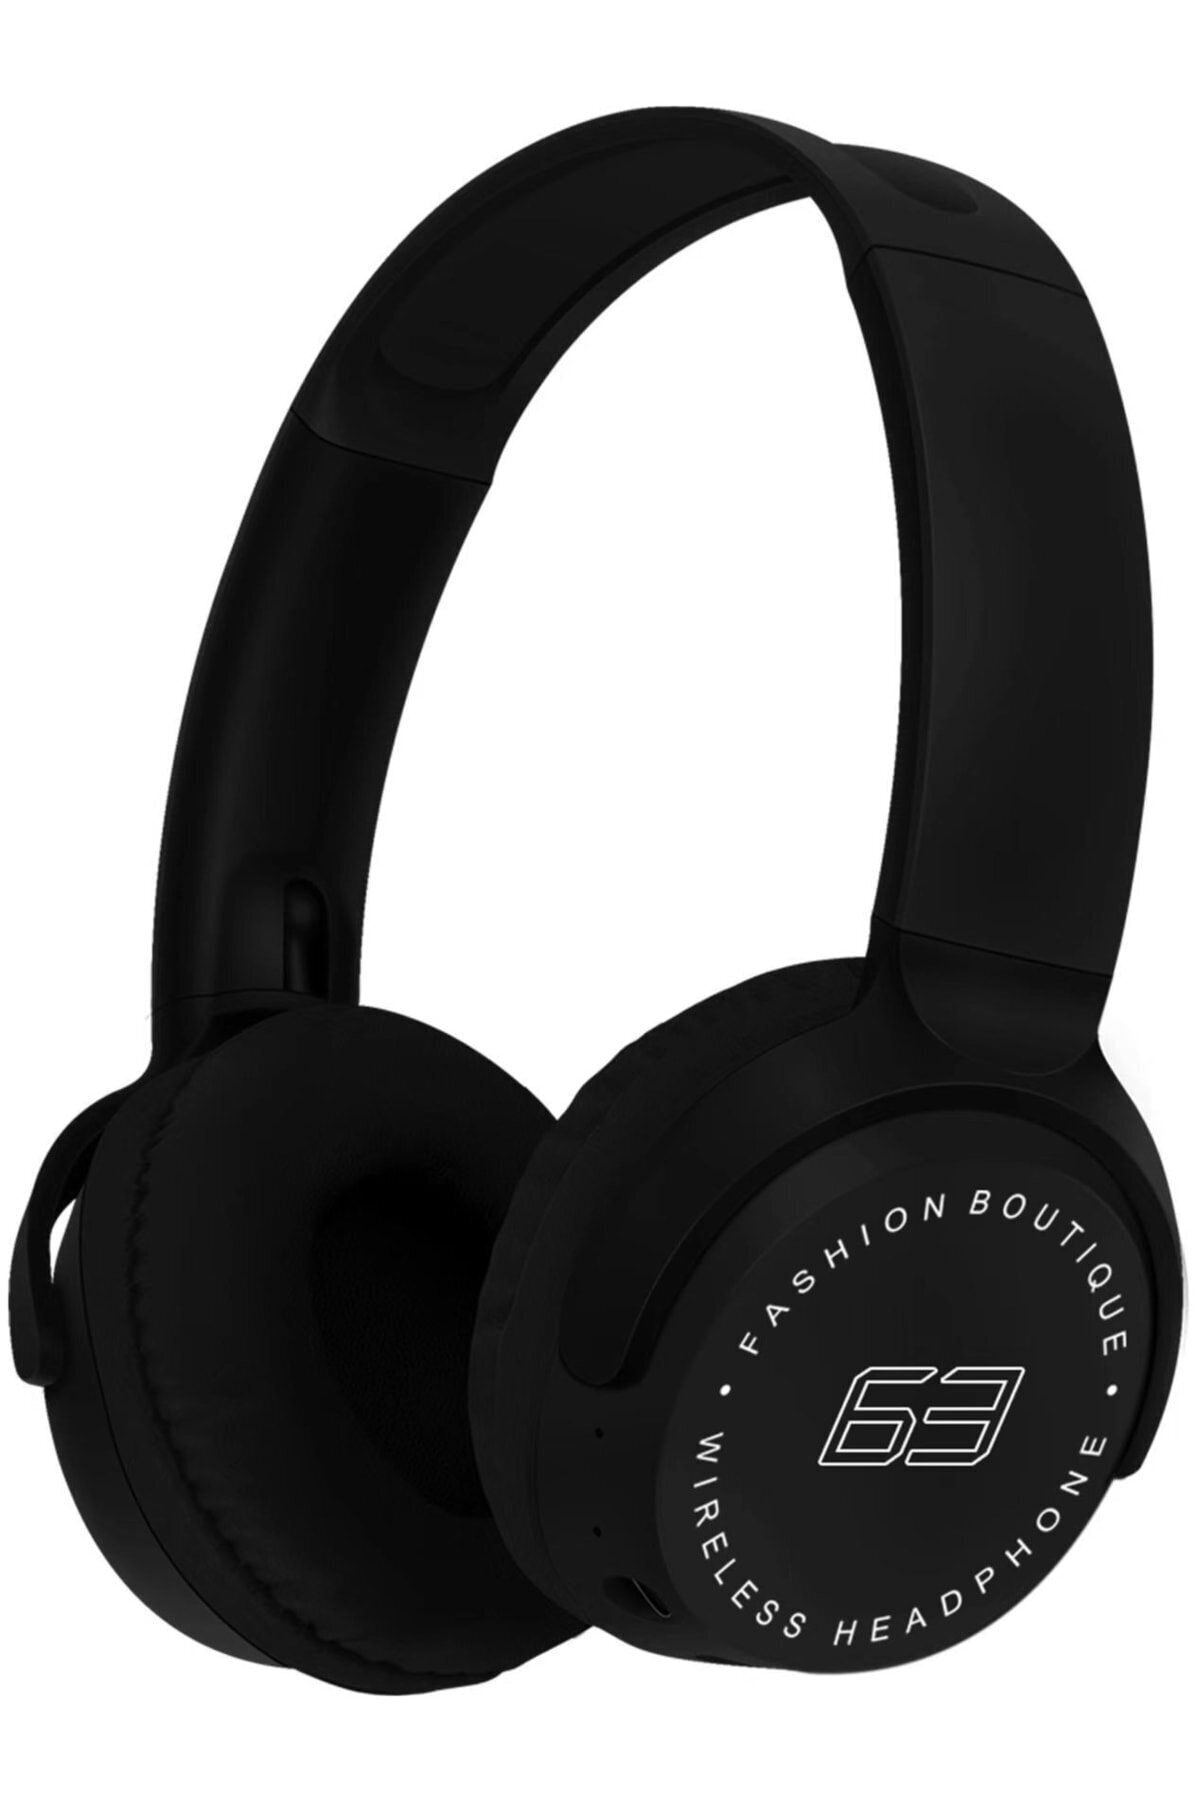 Polygold P63 Kulaküstü Bluetooth Kulaklık 5.1 Wireless Çocuk Kulaklığı Kablosuz Kulaklık